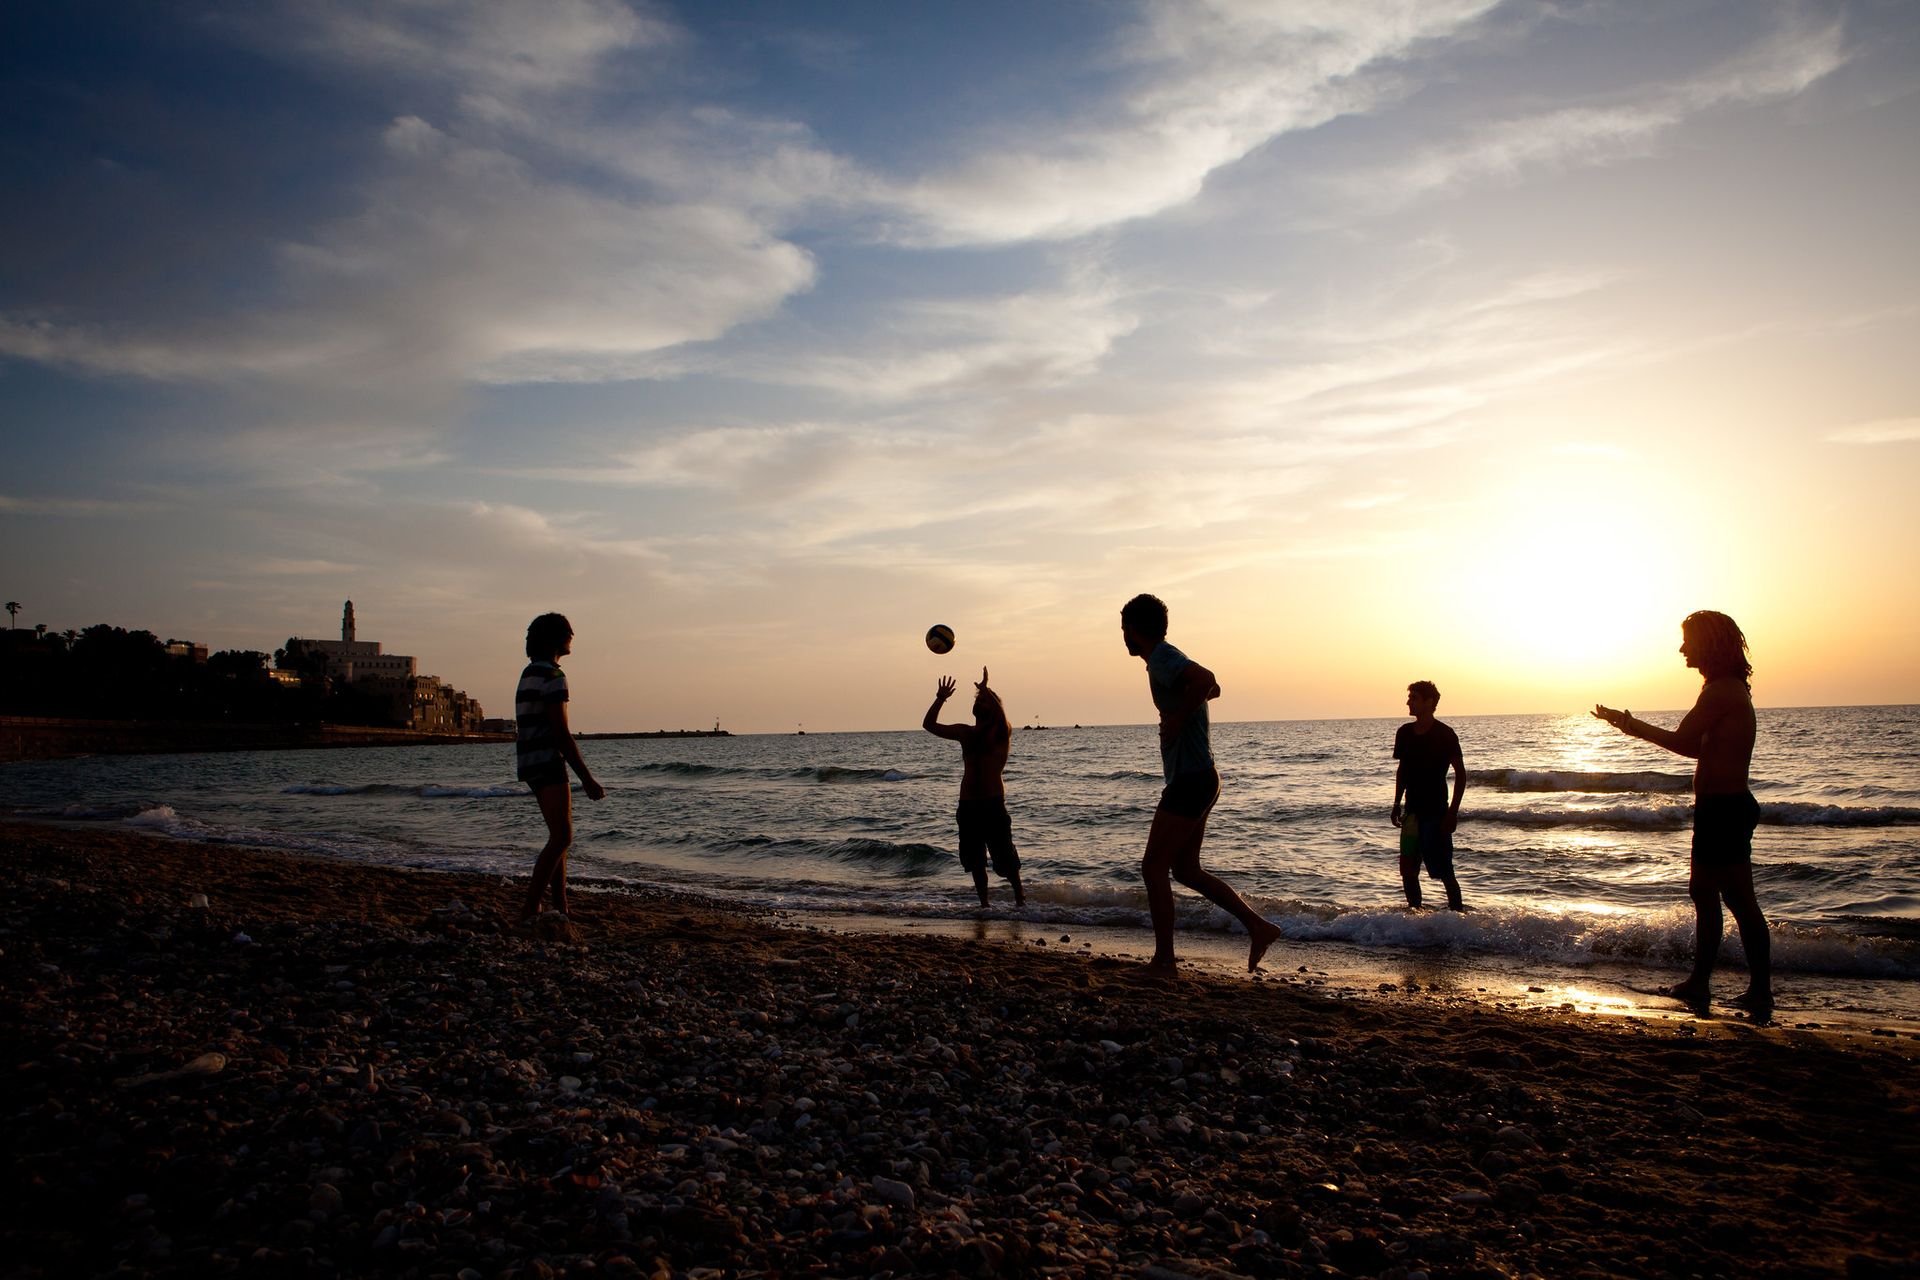 InterContinental David Tel Aviv - The hotel - Sunset on the beach